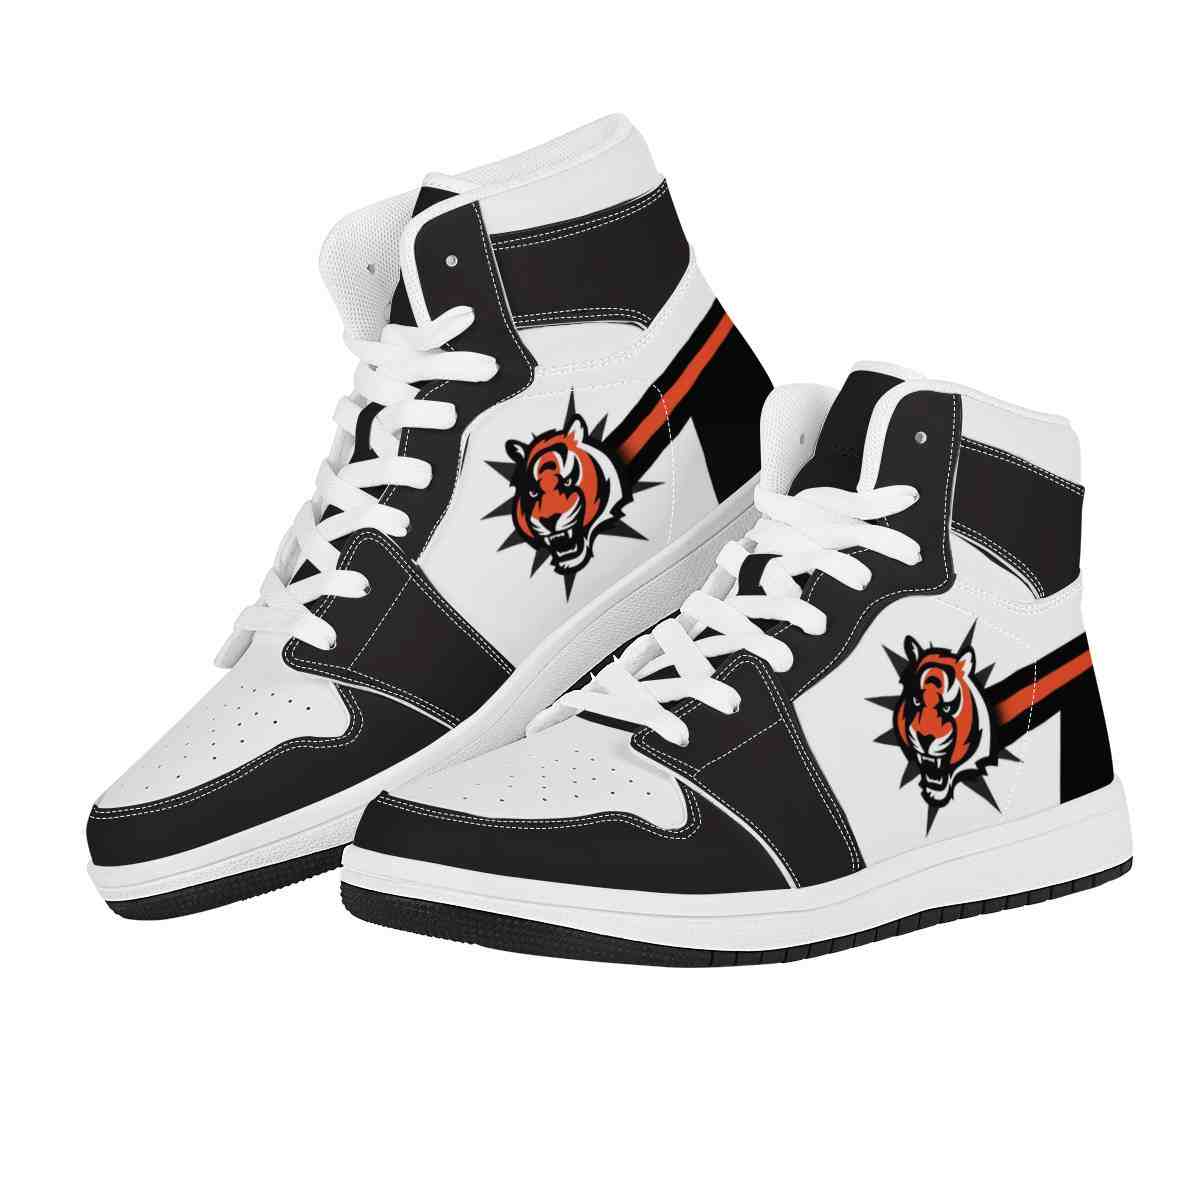 NFL Customized  shoes Cincinnati Bengals High Top Leather AJ1 Sneakers   001